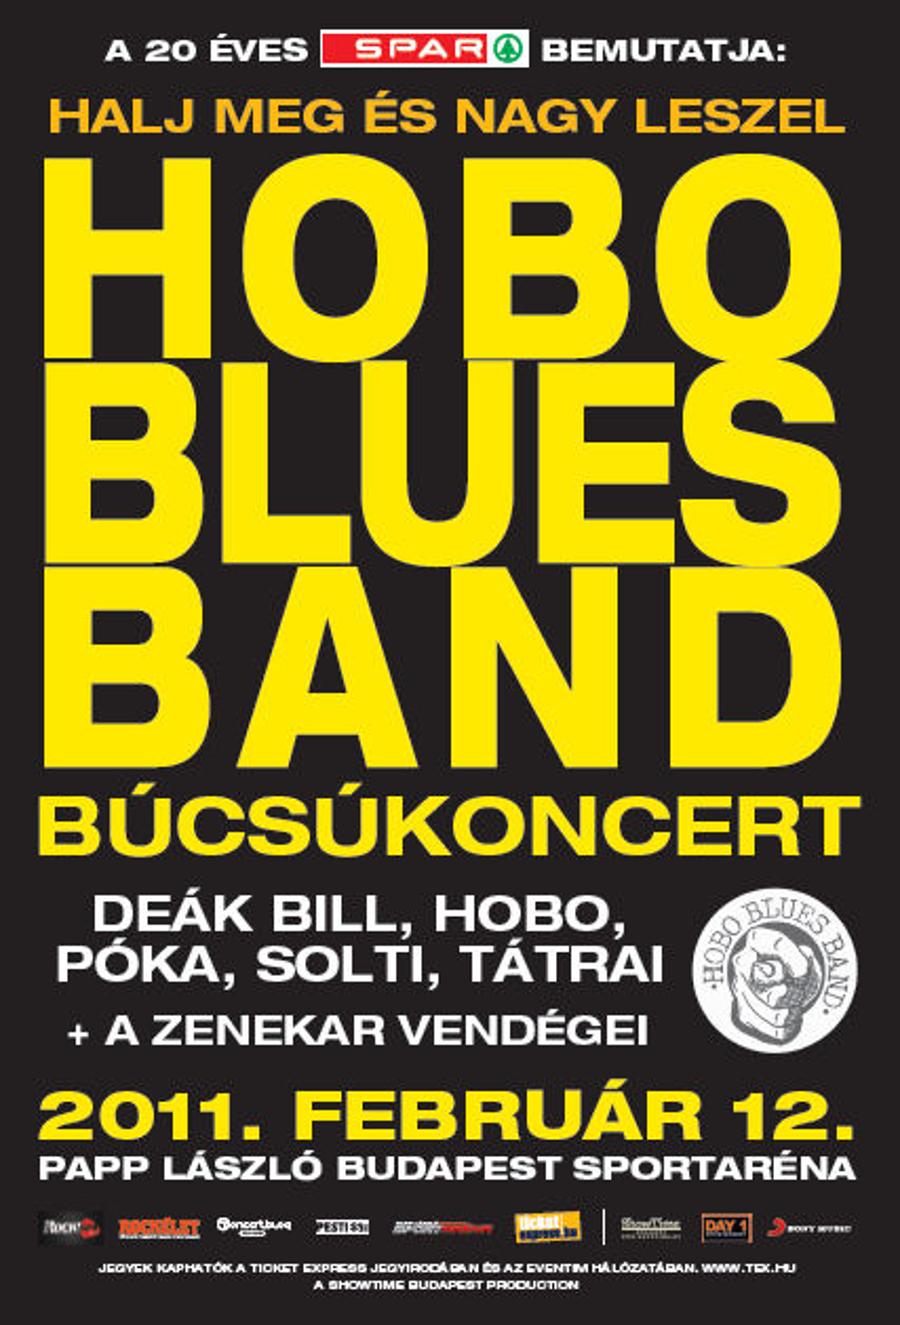 Hungarian Blues Legend Hobo Plans Farewell Gig